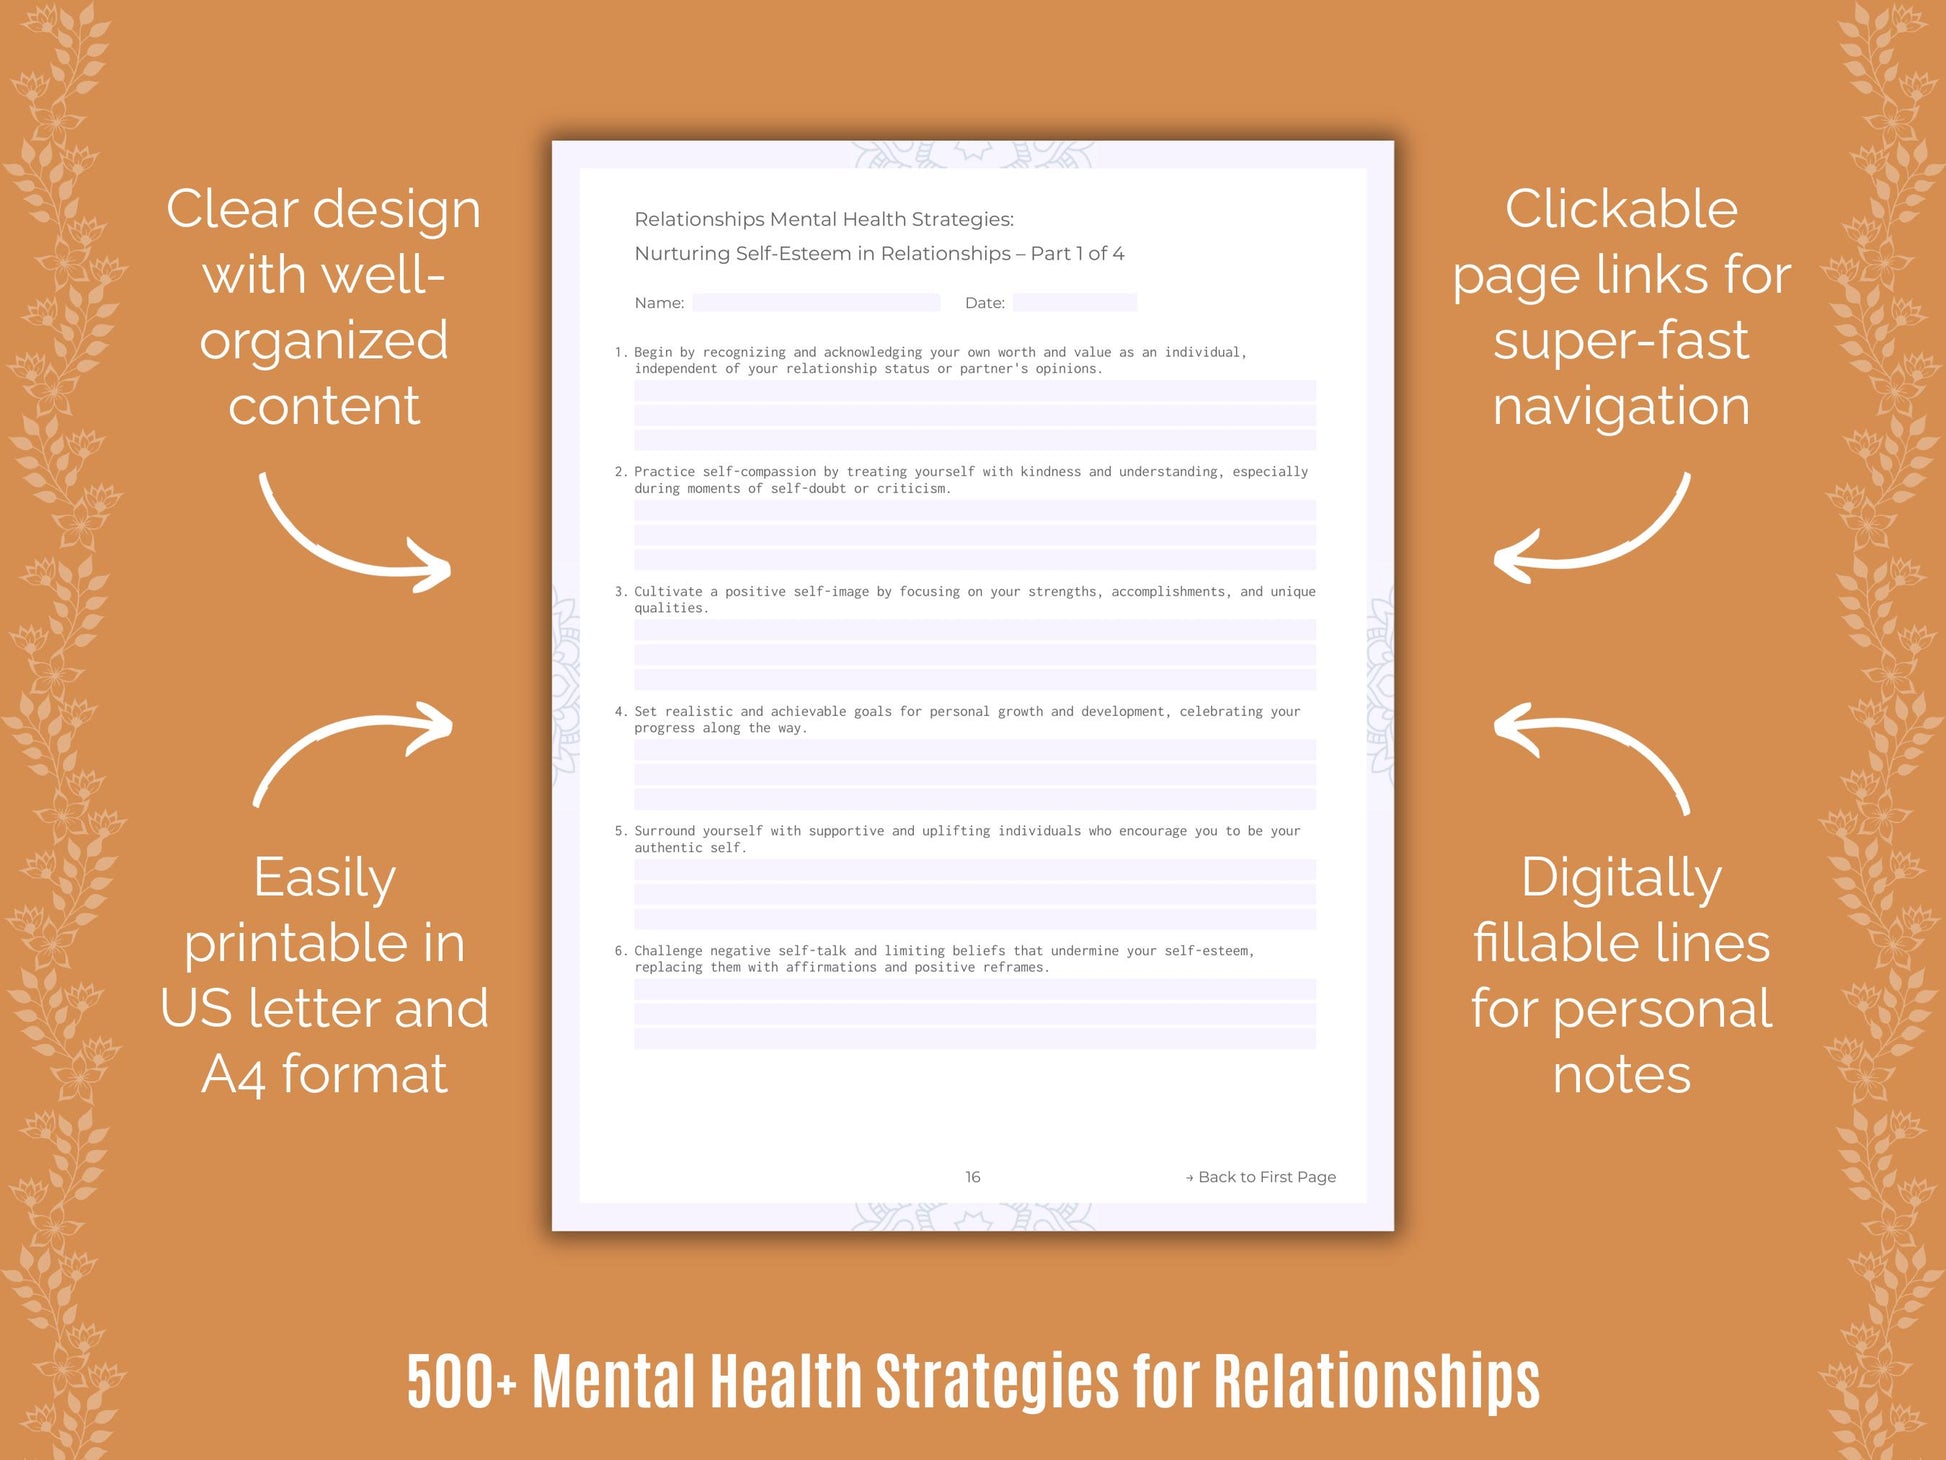 Relationships Mental Health Strategies Workbook